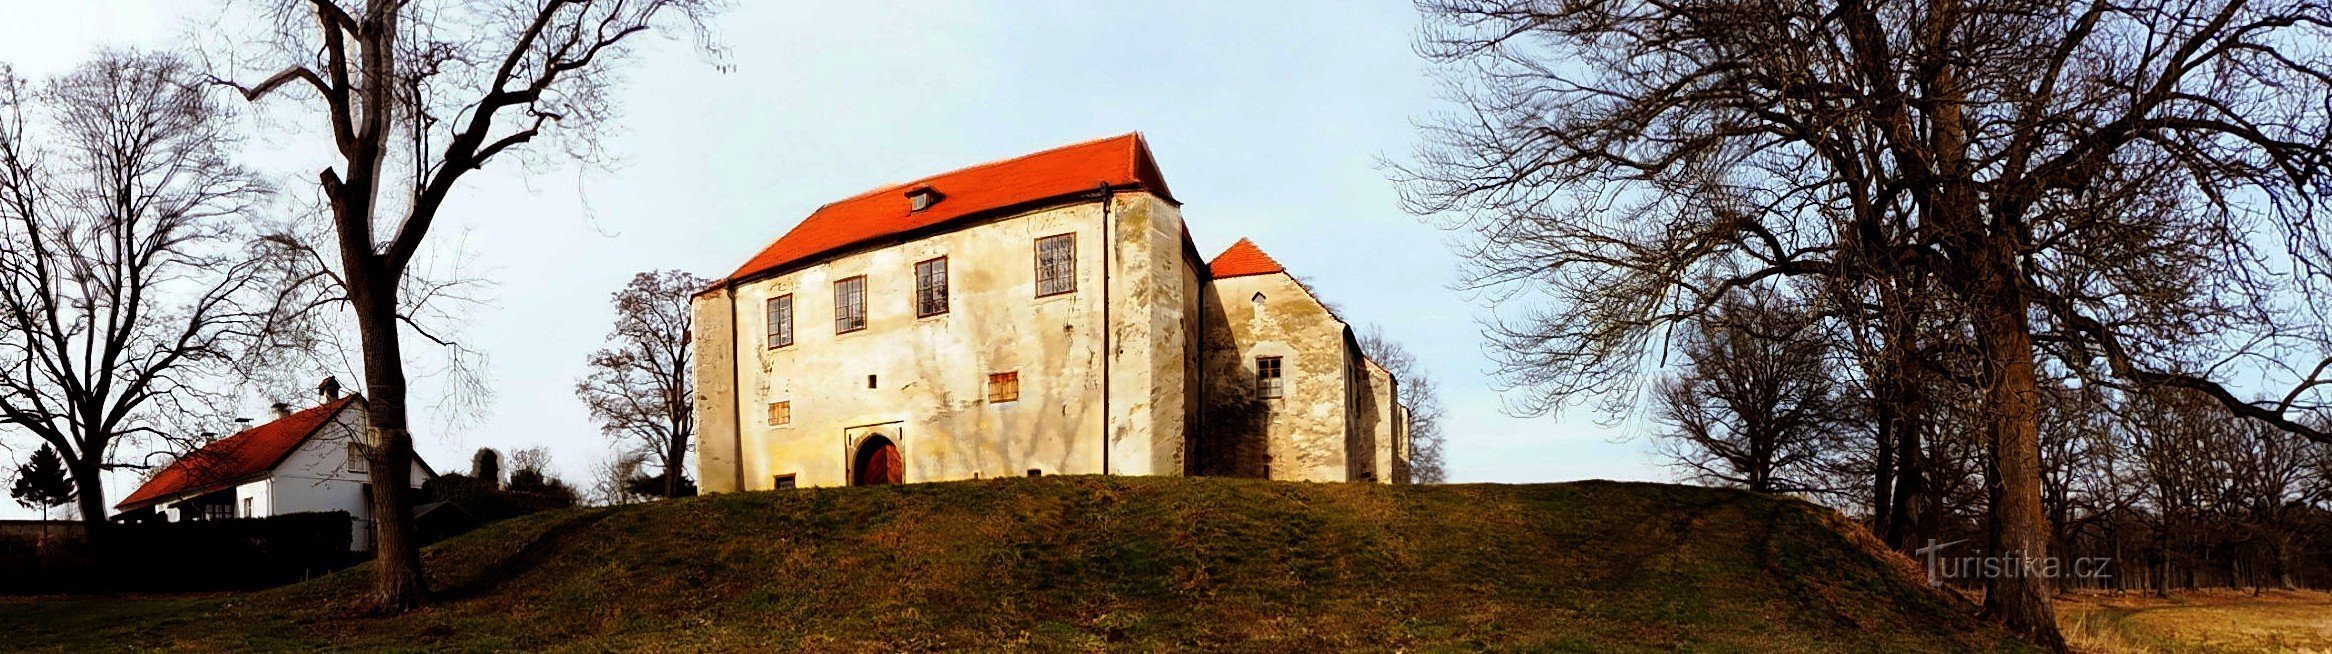 Fortaleza gótica Zuknštejn